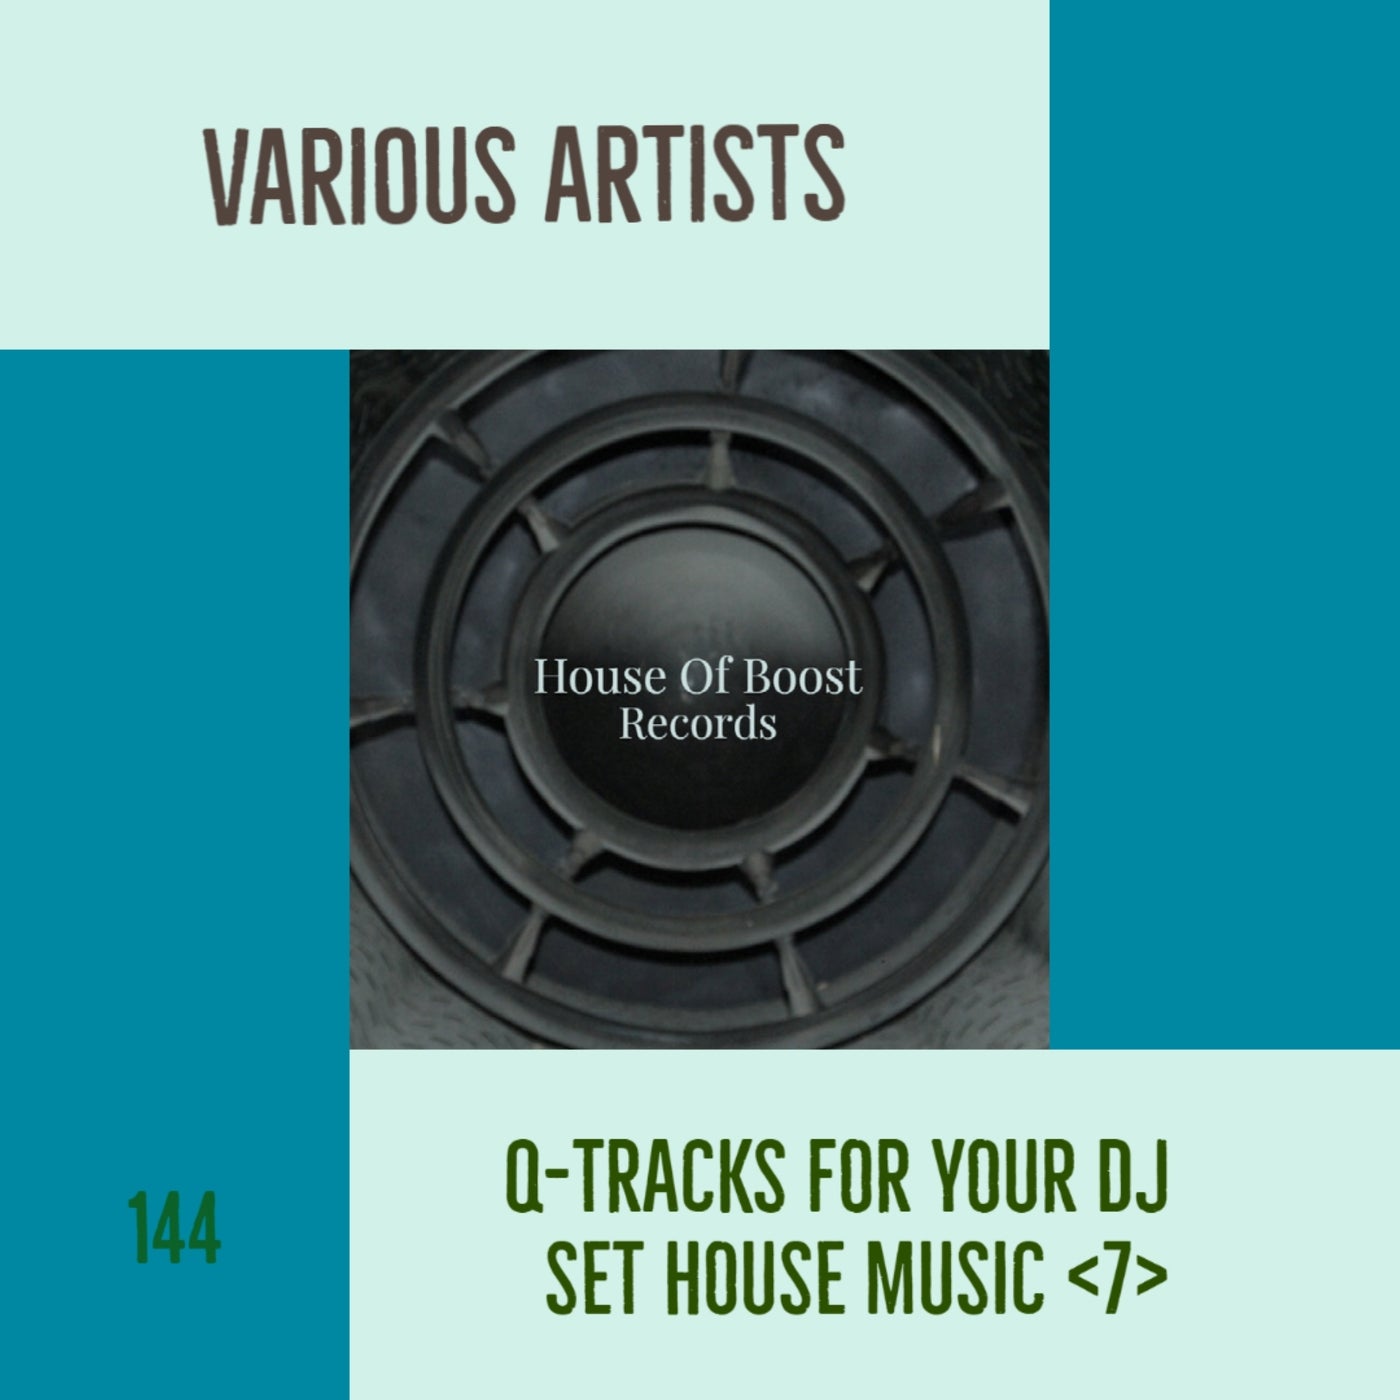 Q-Tracks for your Dj Set House Music 7